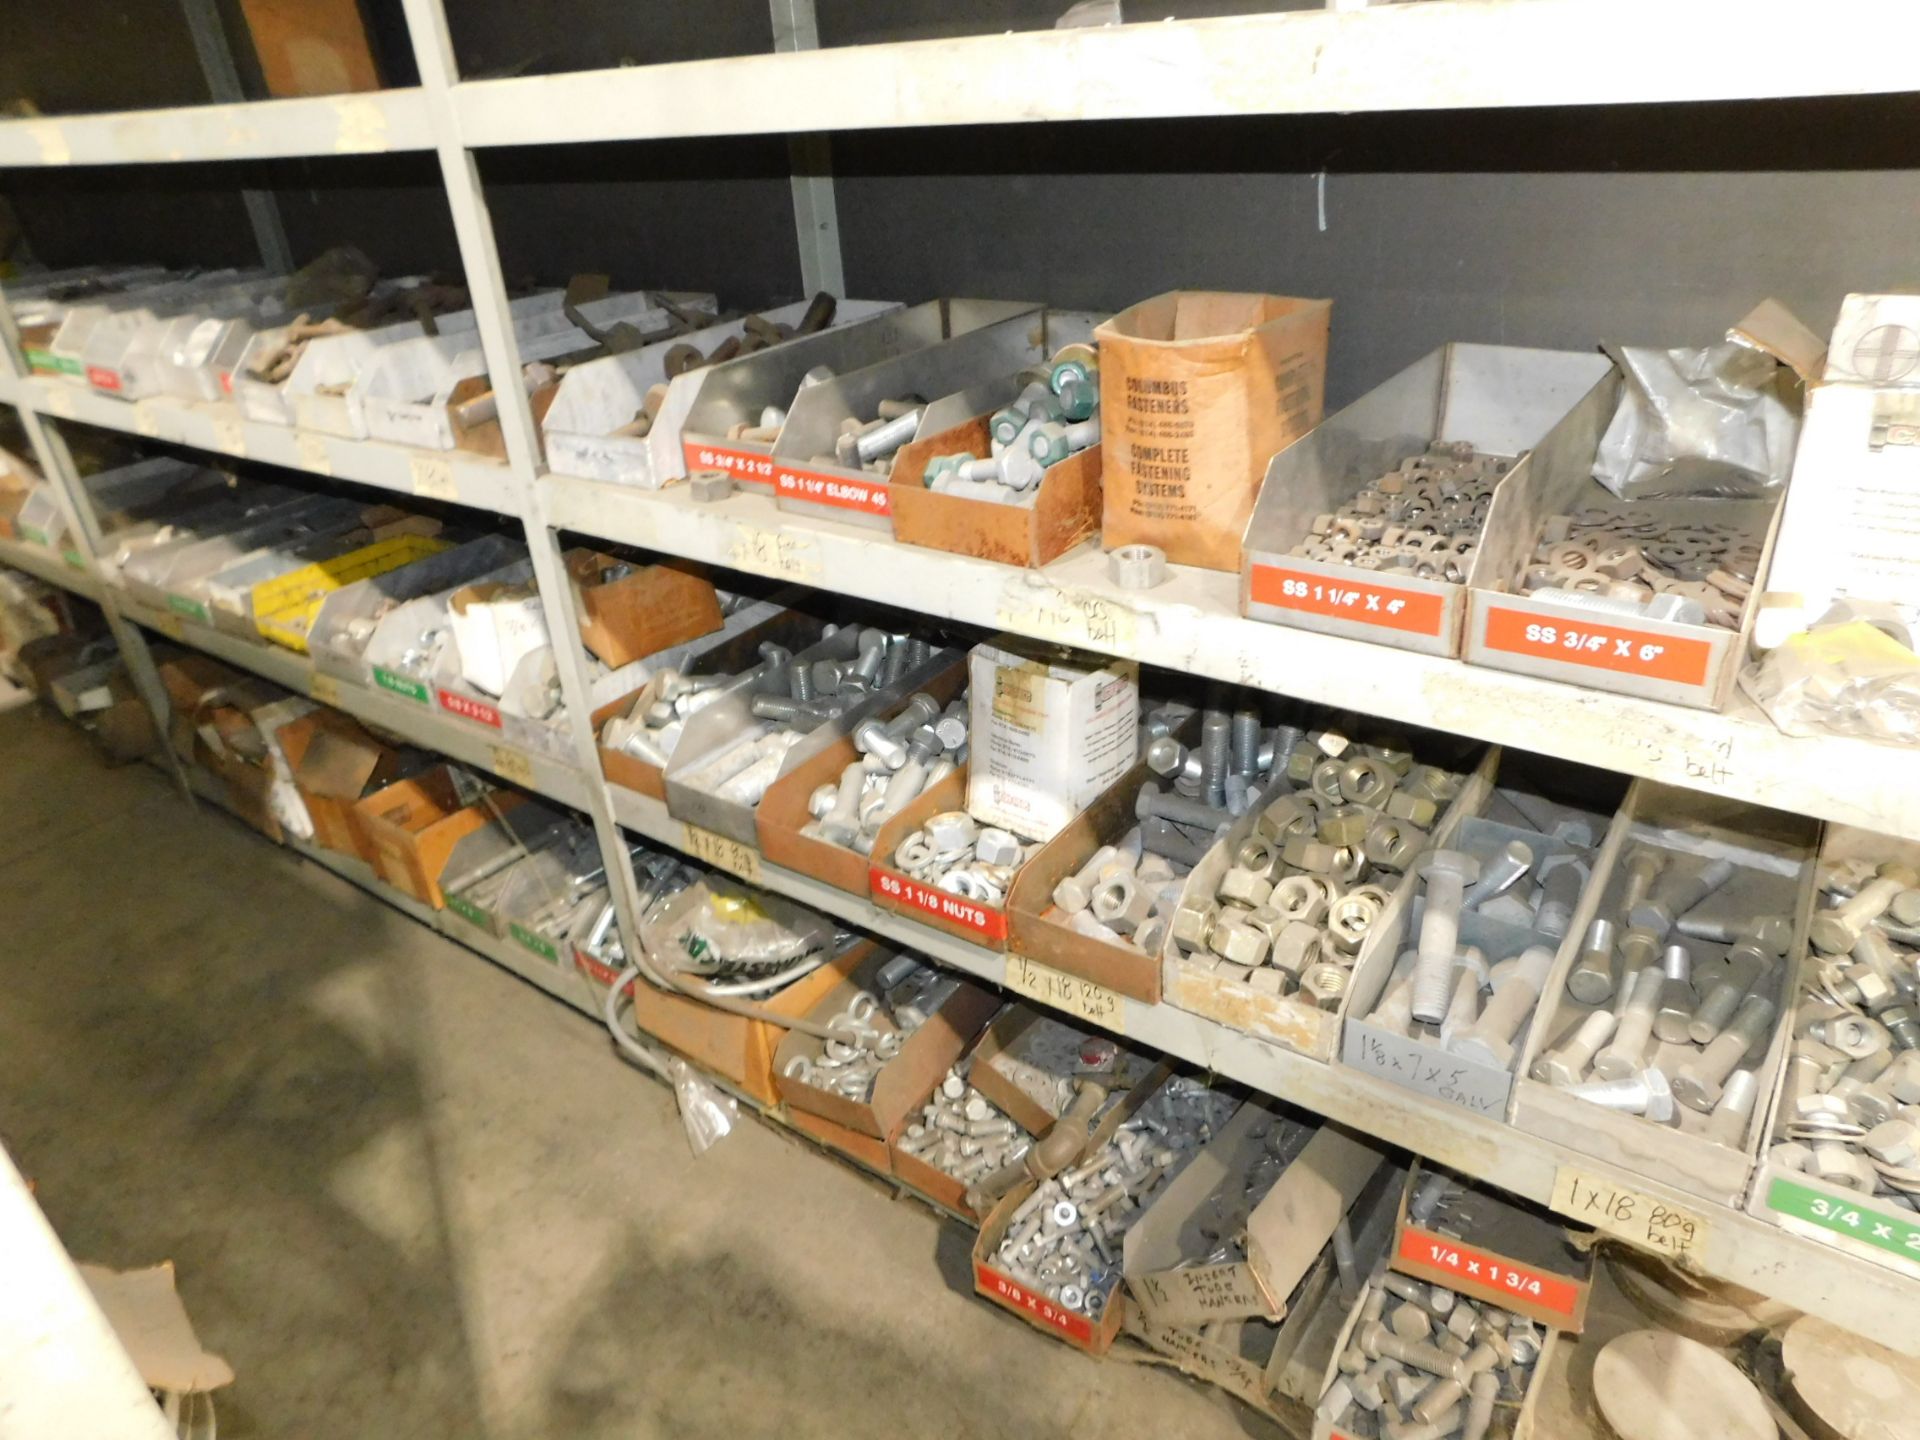 Assorted Hardware on Shelving Unit